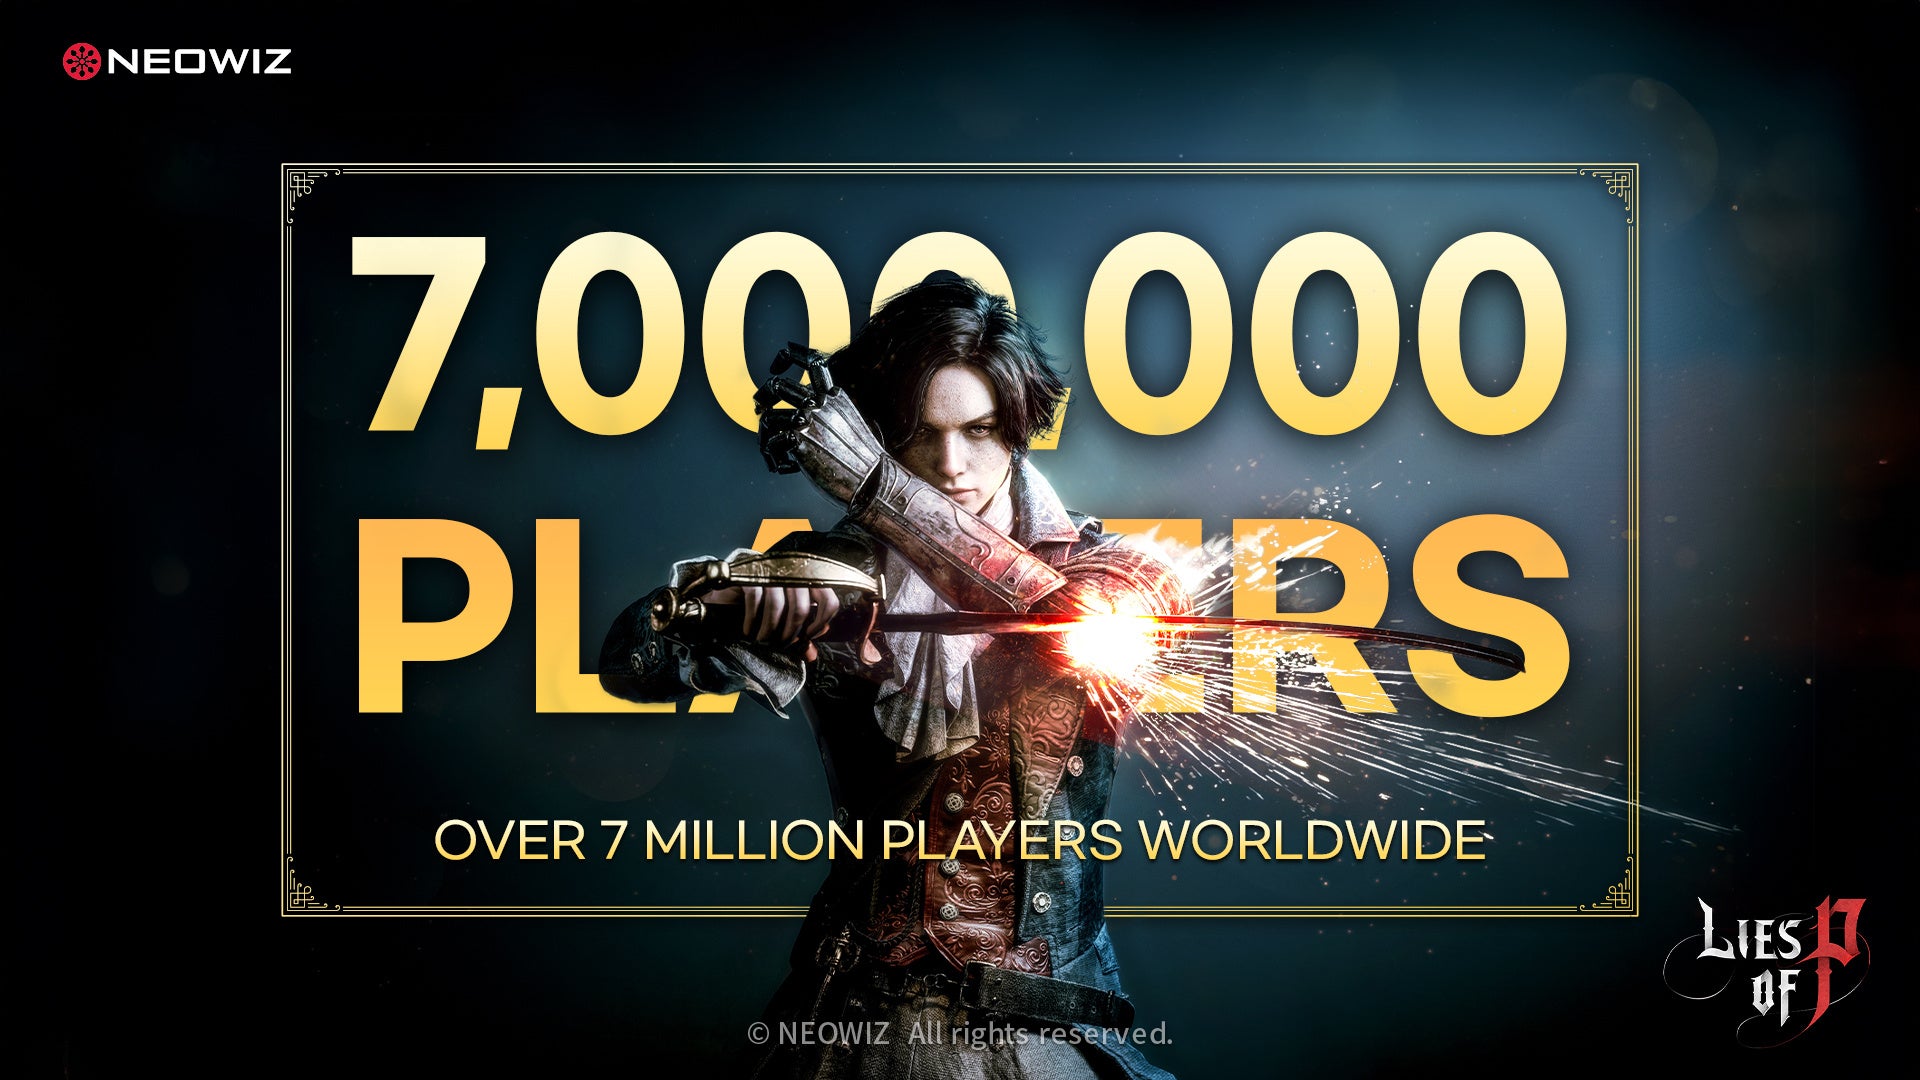 【NEOWIZ　プレスリリース】ソウルライクアクションRPG 『Lies of P』 世界累計プレイヤー数700万人達成！